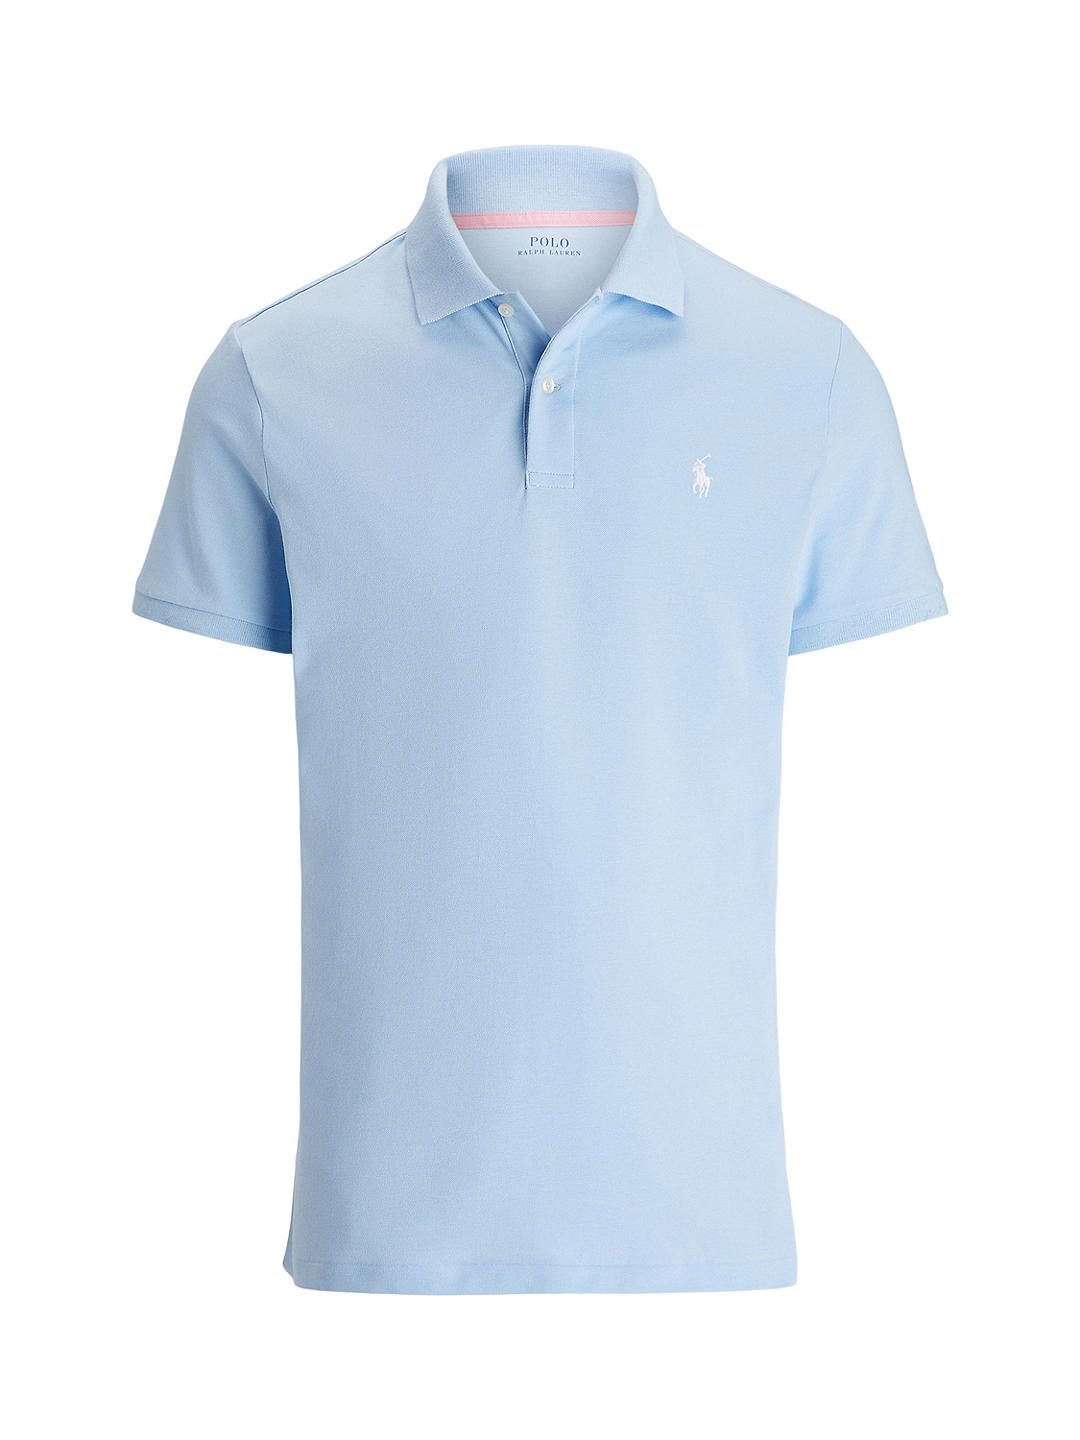 Polo Golf Ralph Lauren Tailored Fit Performance Mesh Polo Shirt, Office Blue